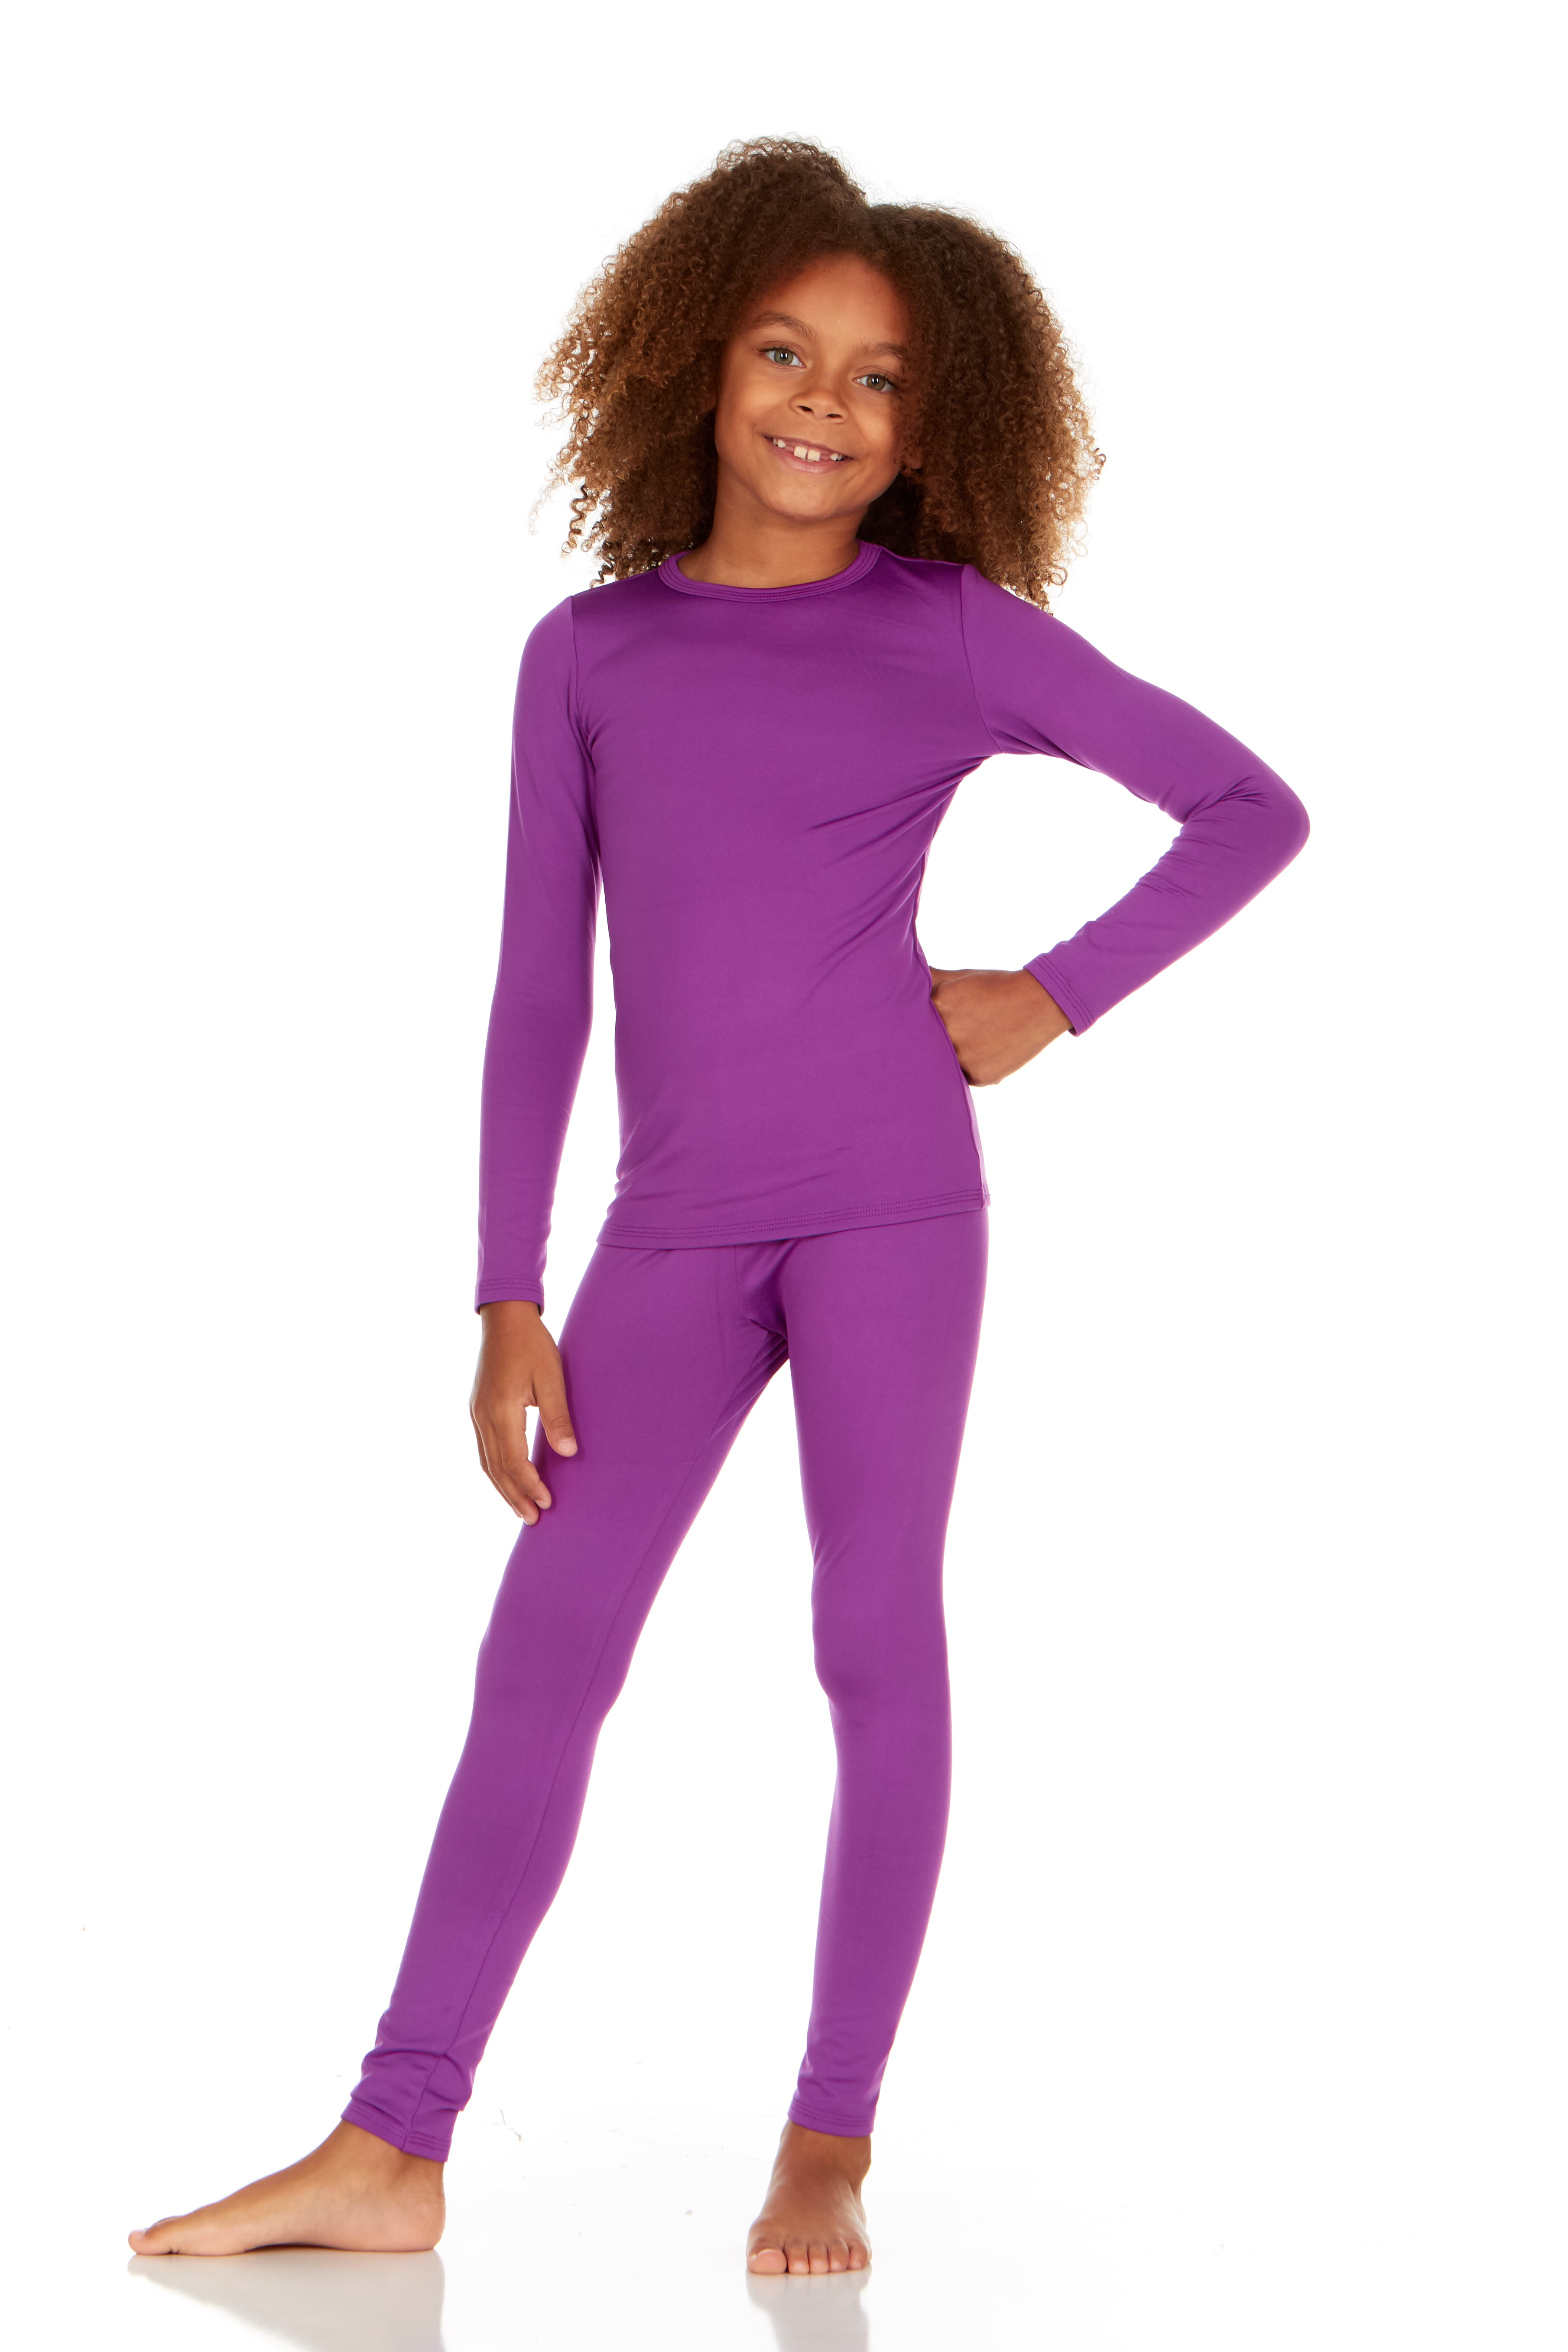 Thermajane Thermal Underwear for Girls Long John Set Kids (Purple, X-Small)  